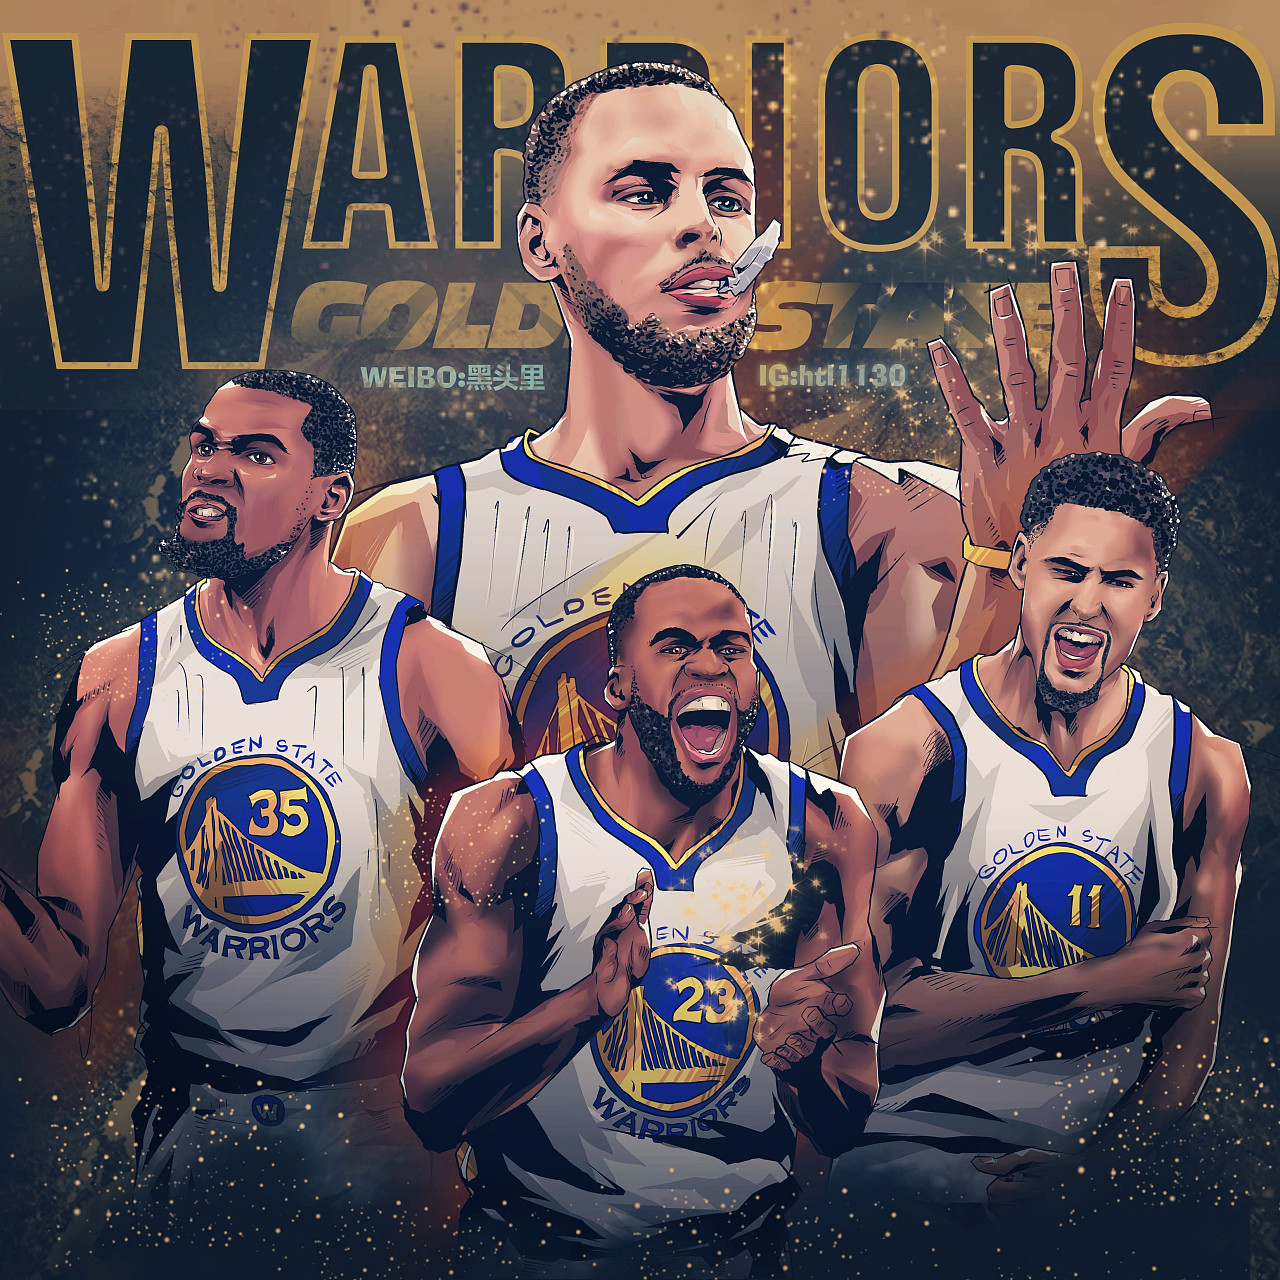 Sports Golden State Warriors 4k Ultra HD Wallpaper by Michael Tipton